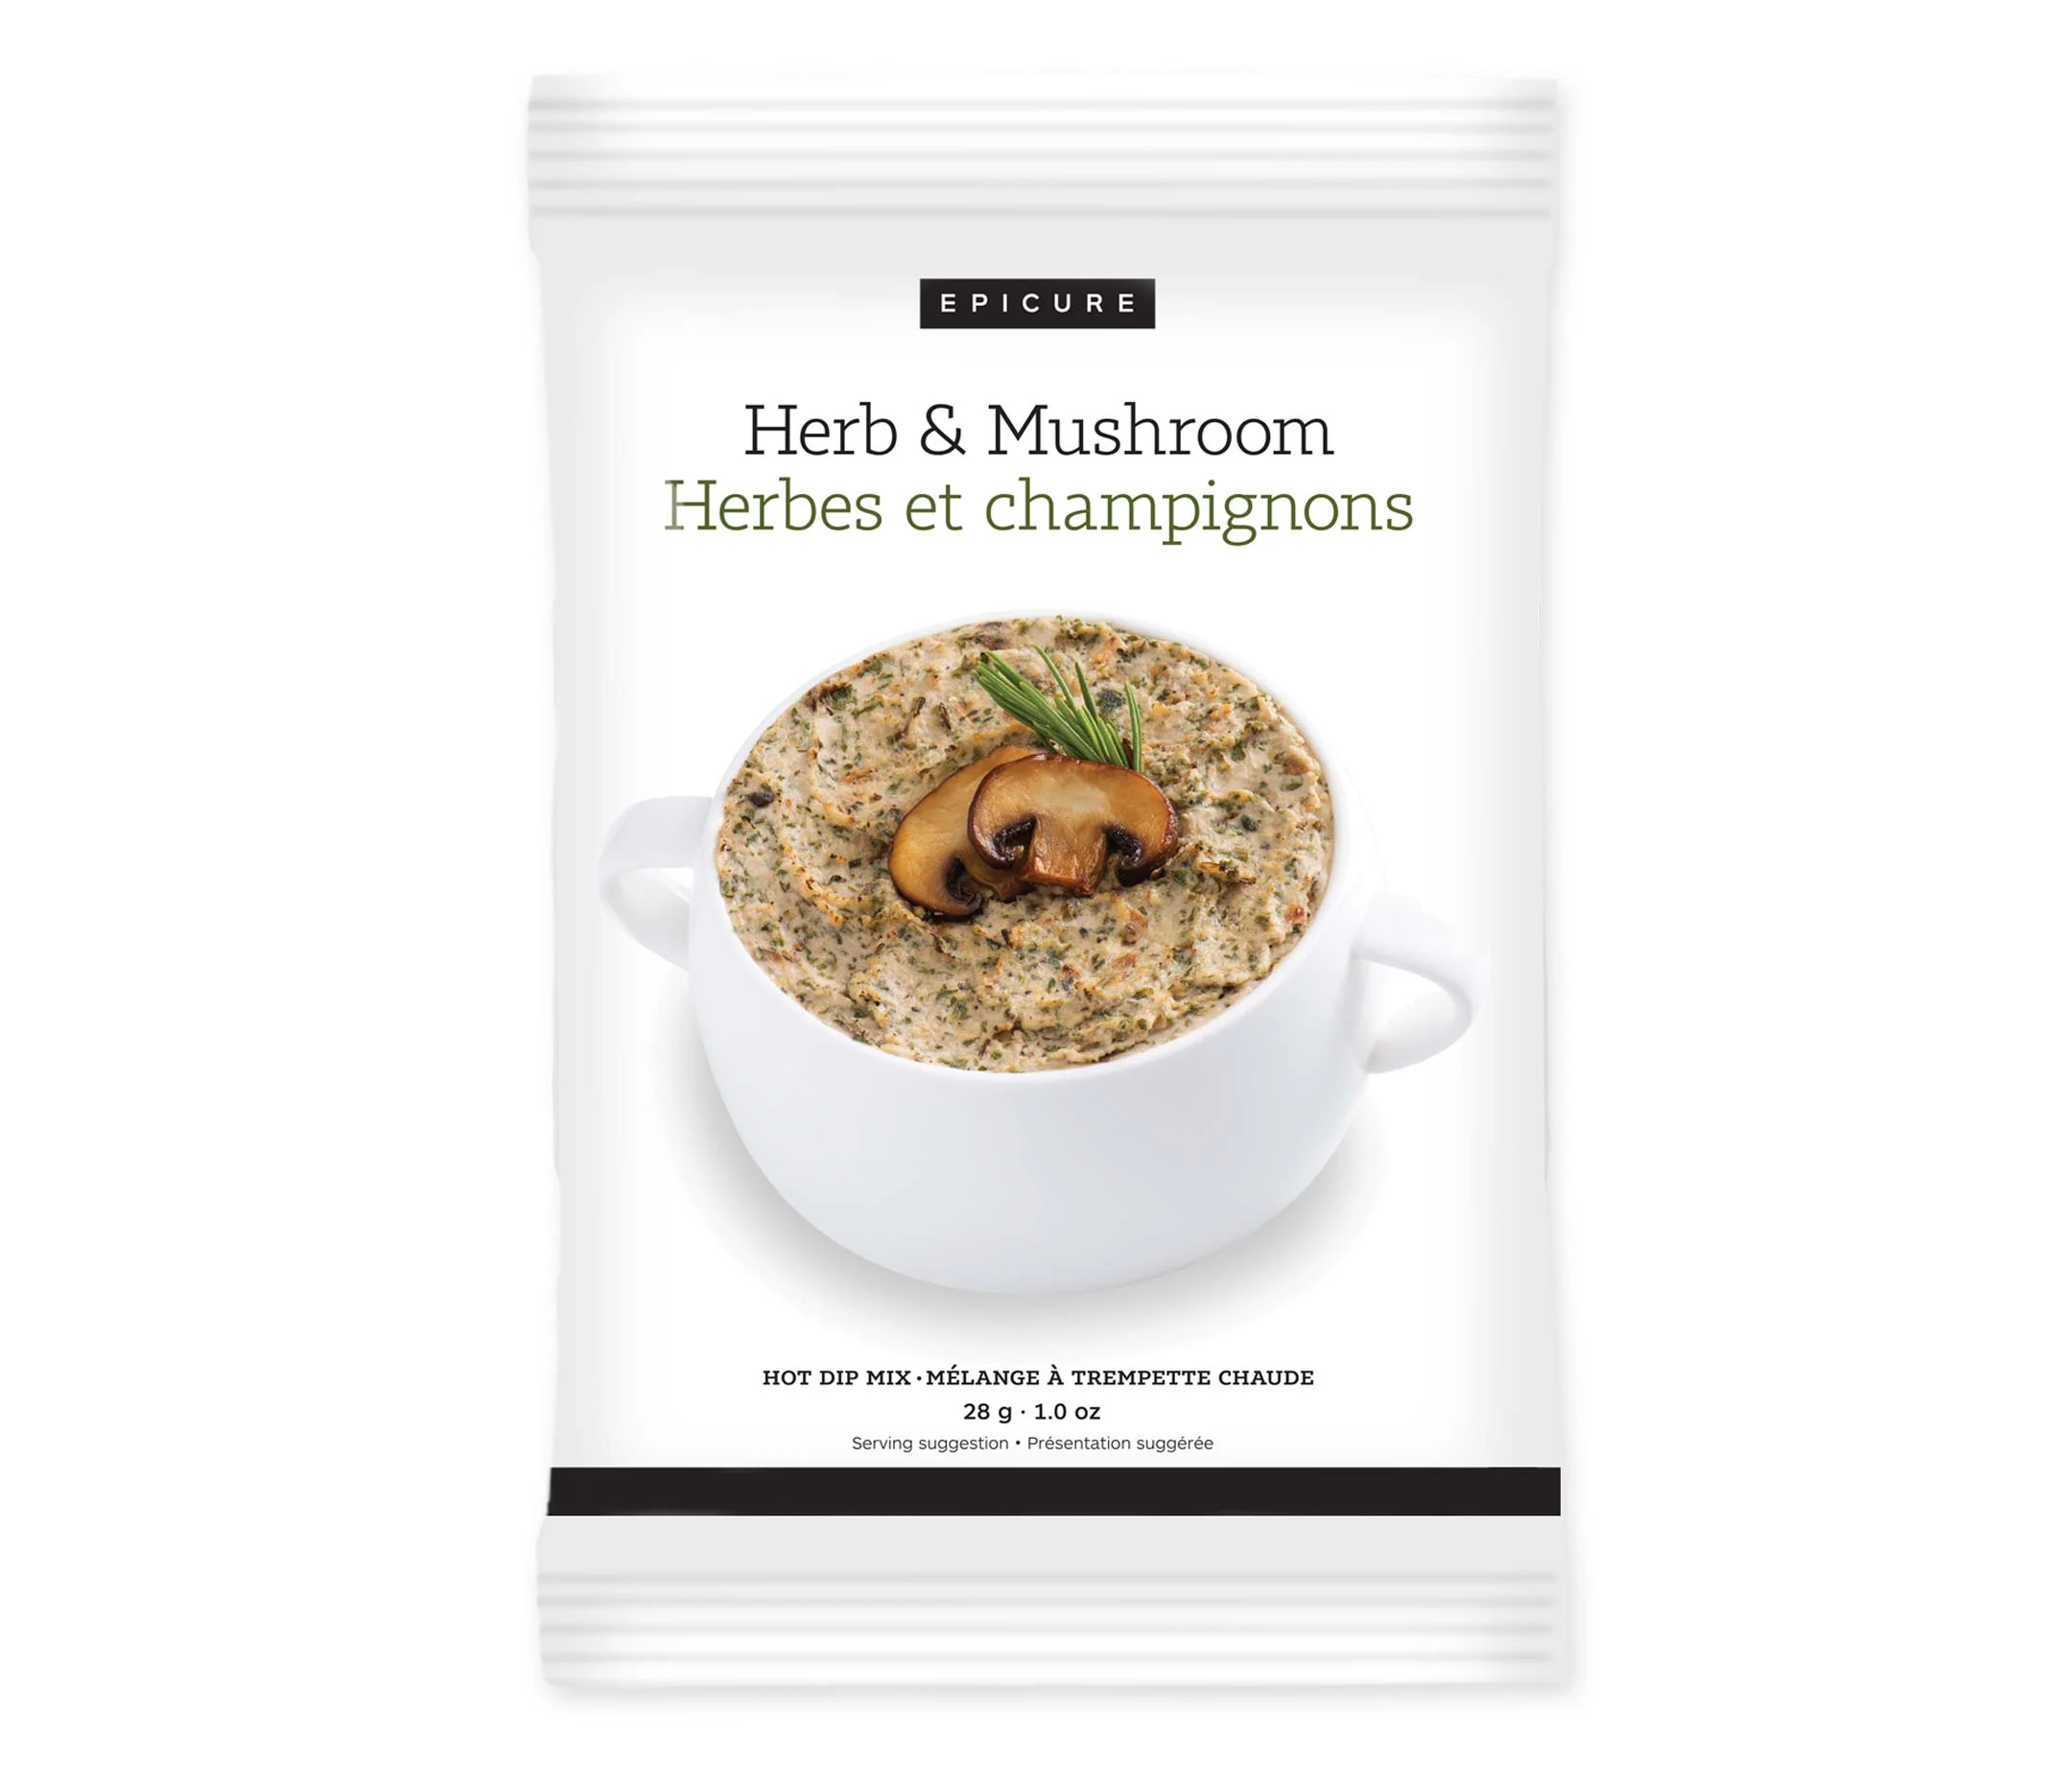 Herb & Mushroom Hot Dip Mix (Pack of 3)